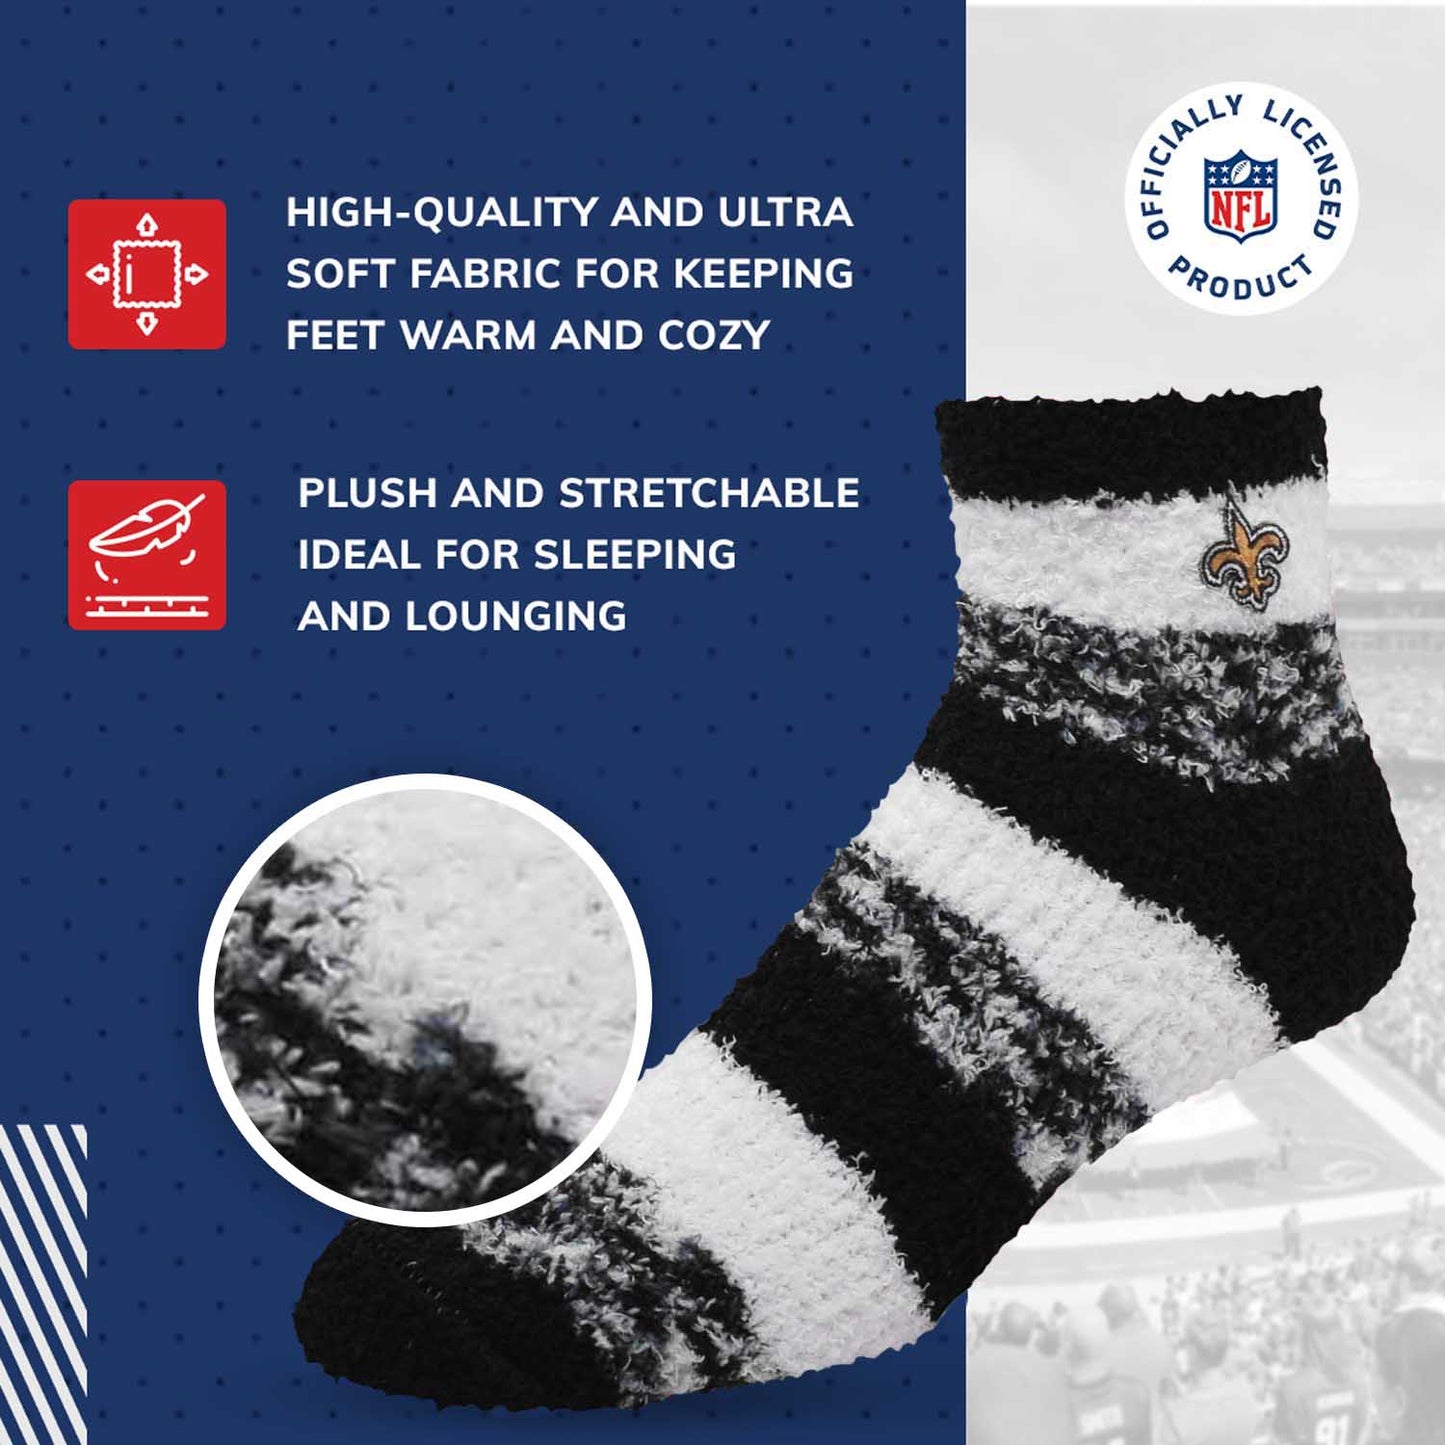 New Orleans Saints NFL Cozy Soft Slipper Socks - Black